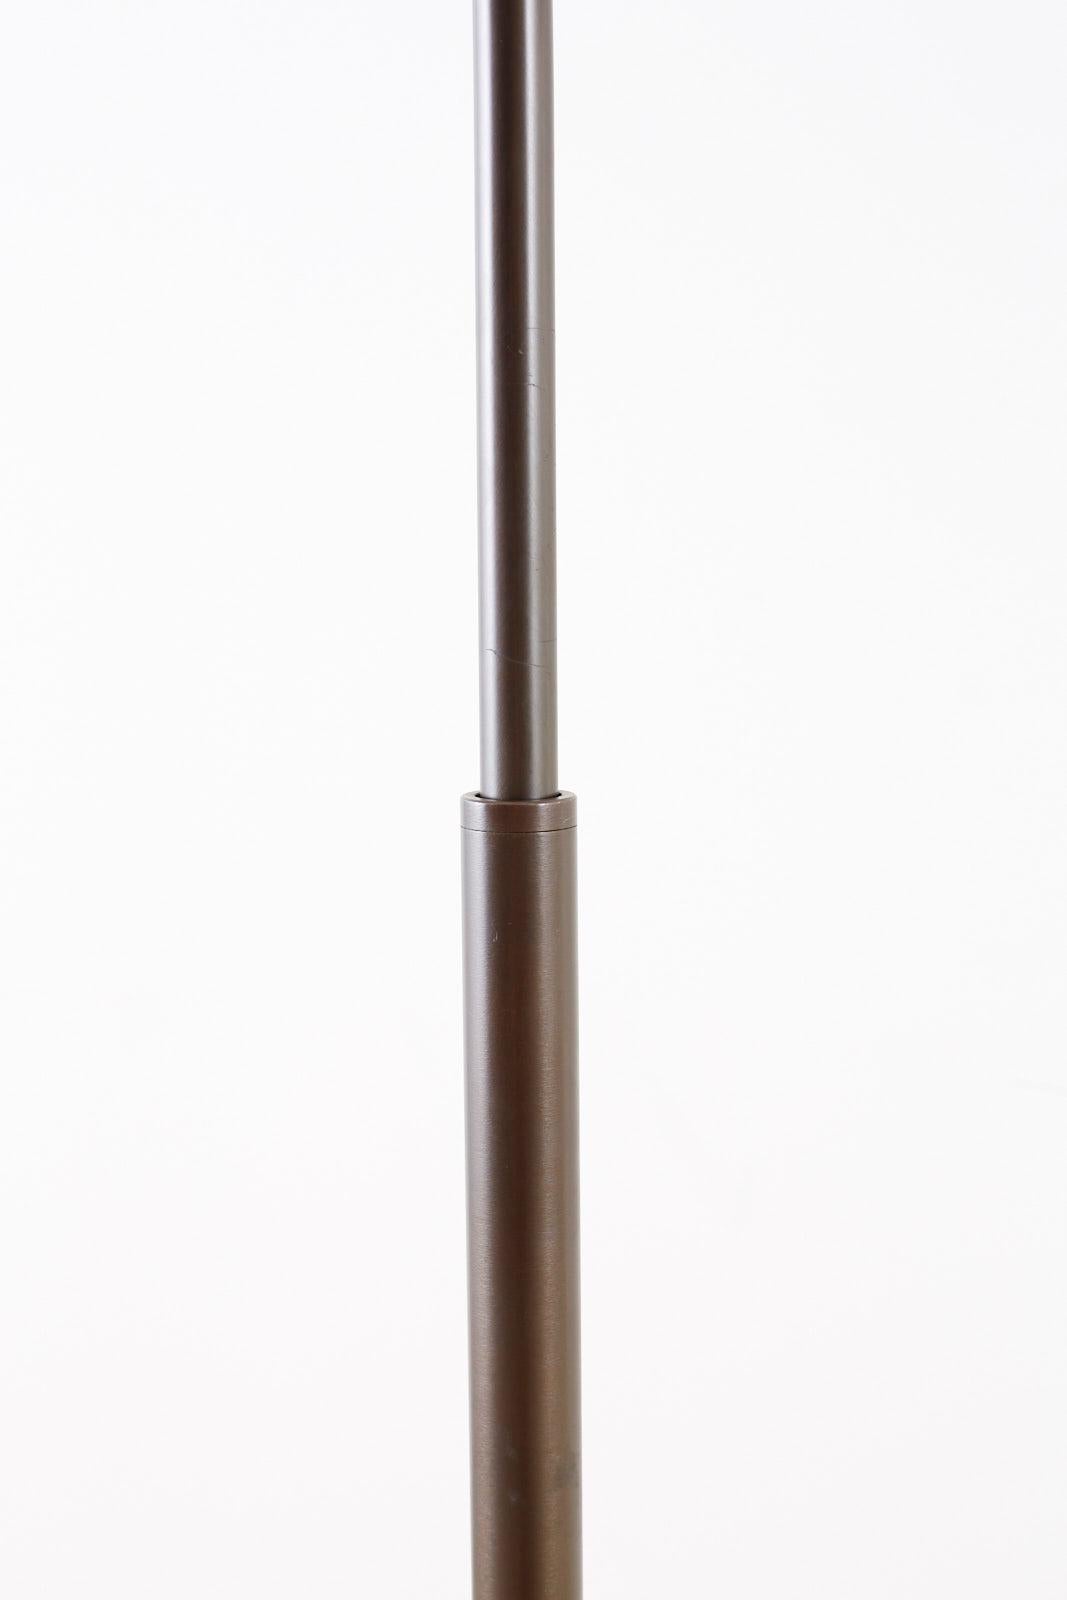 Casella Bronze Adjustable Pharmacy Floor Lamp 4